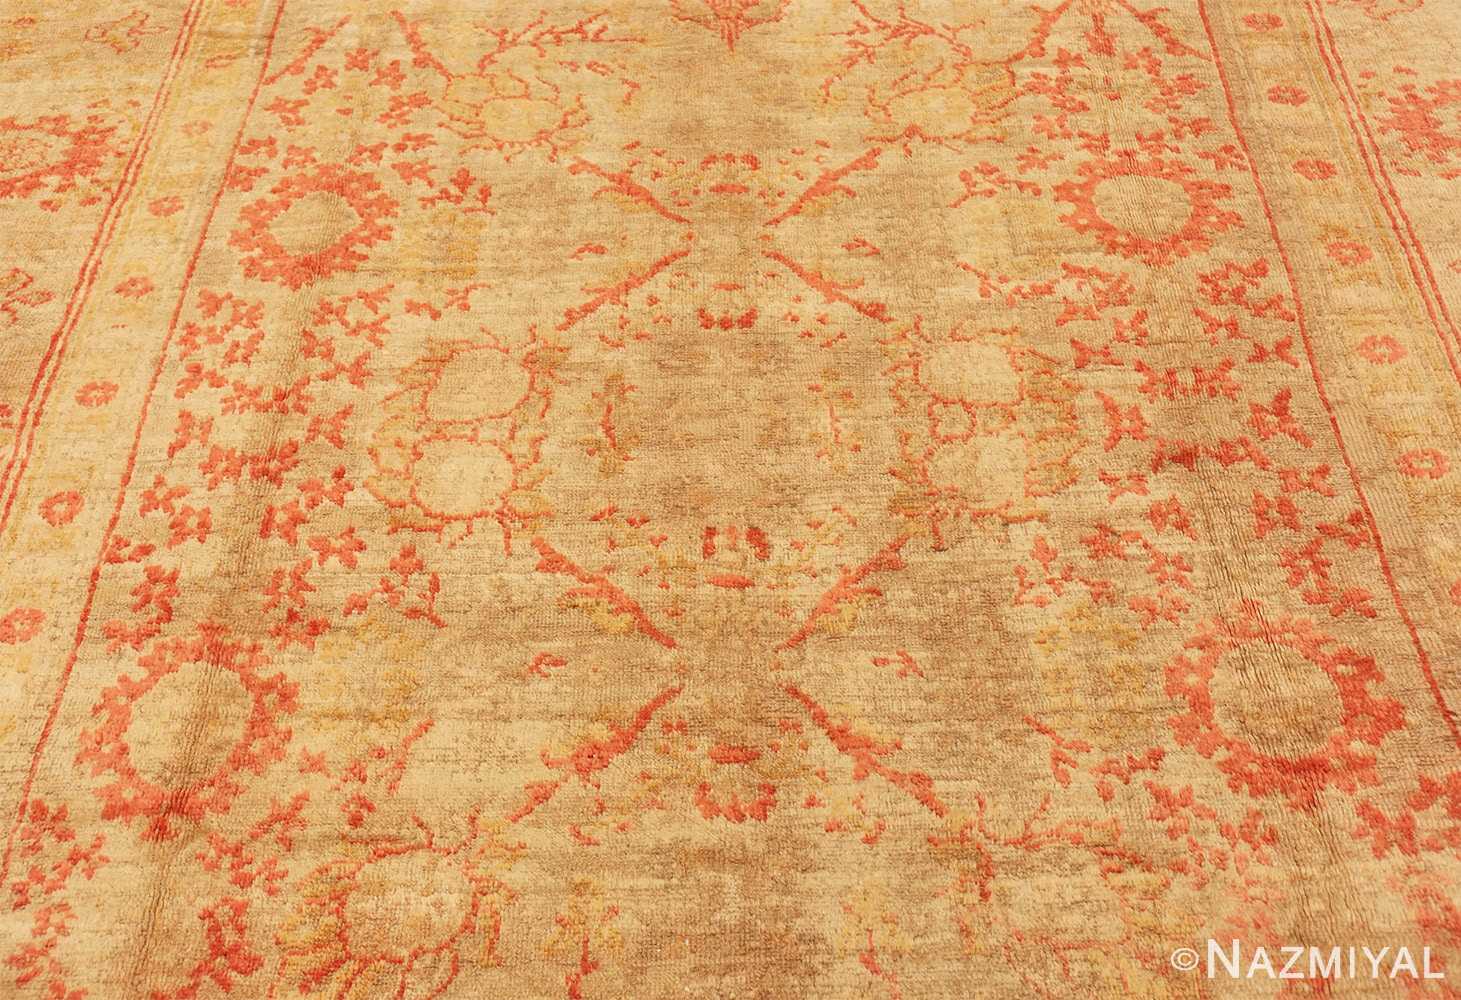 Field antique Oushak Turkish rug 70235 by Nazmiyal